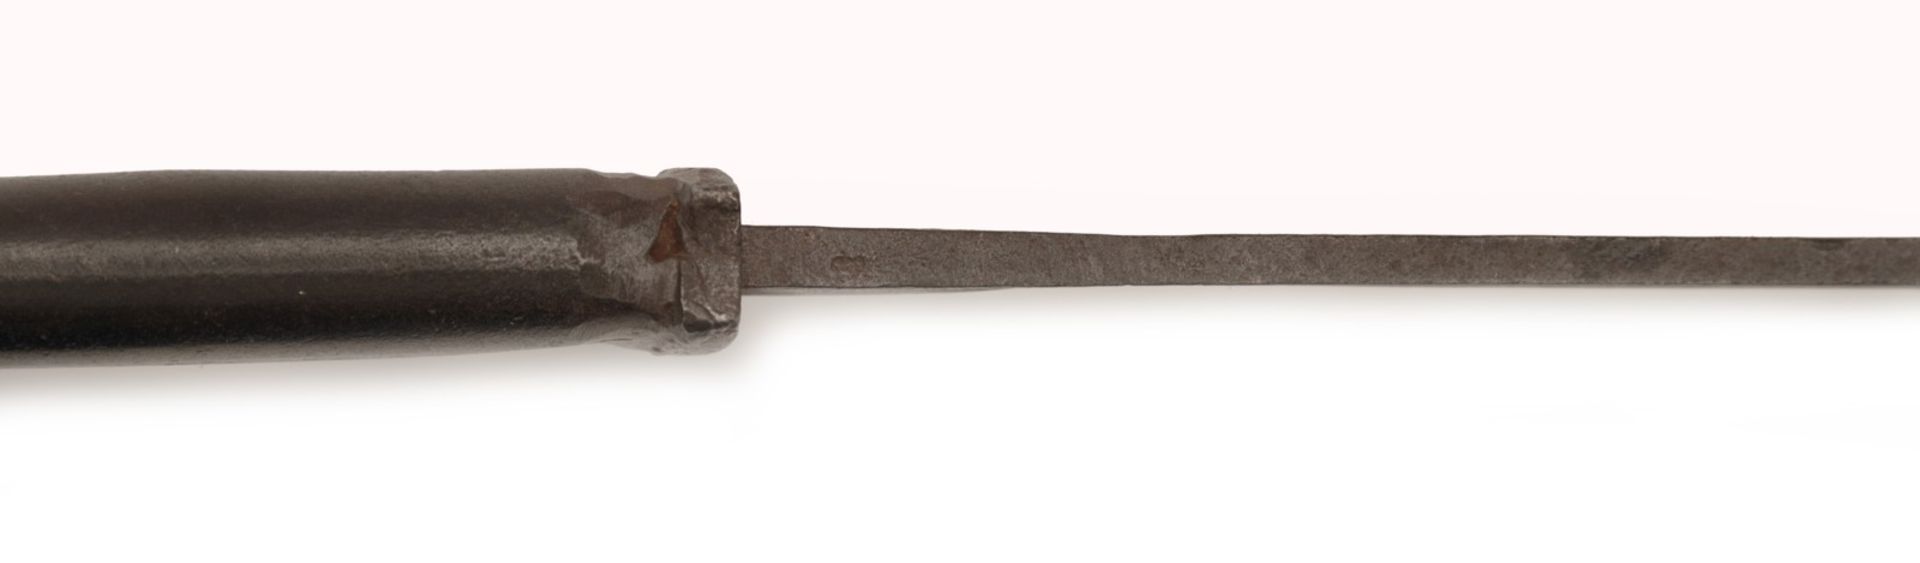 Ersatz bayonet - Image 2 of 2